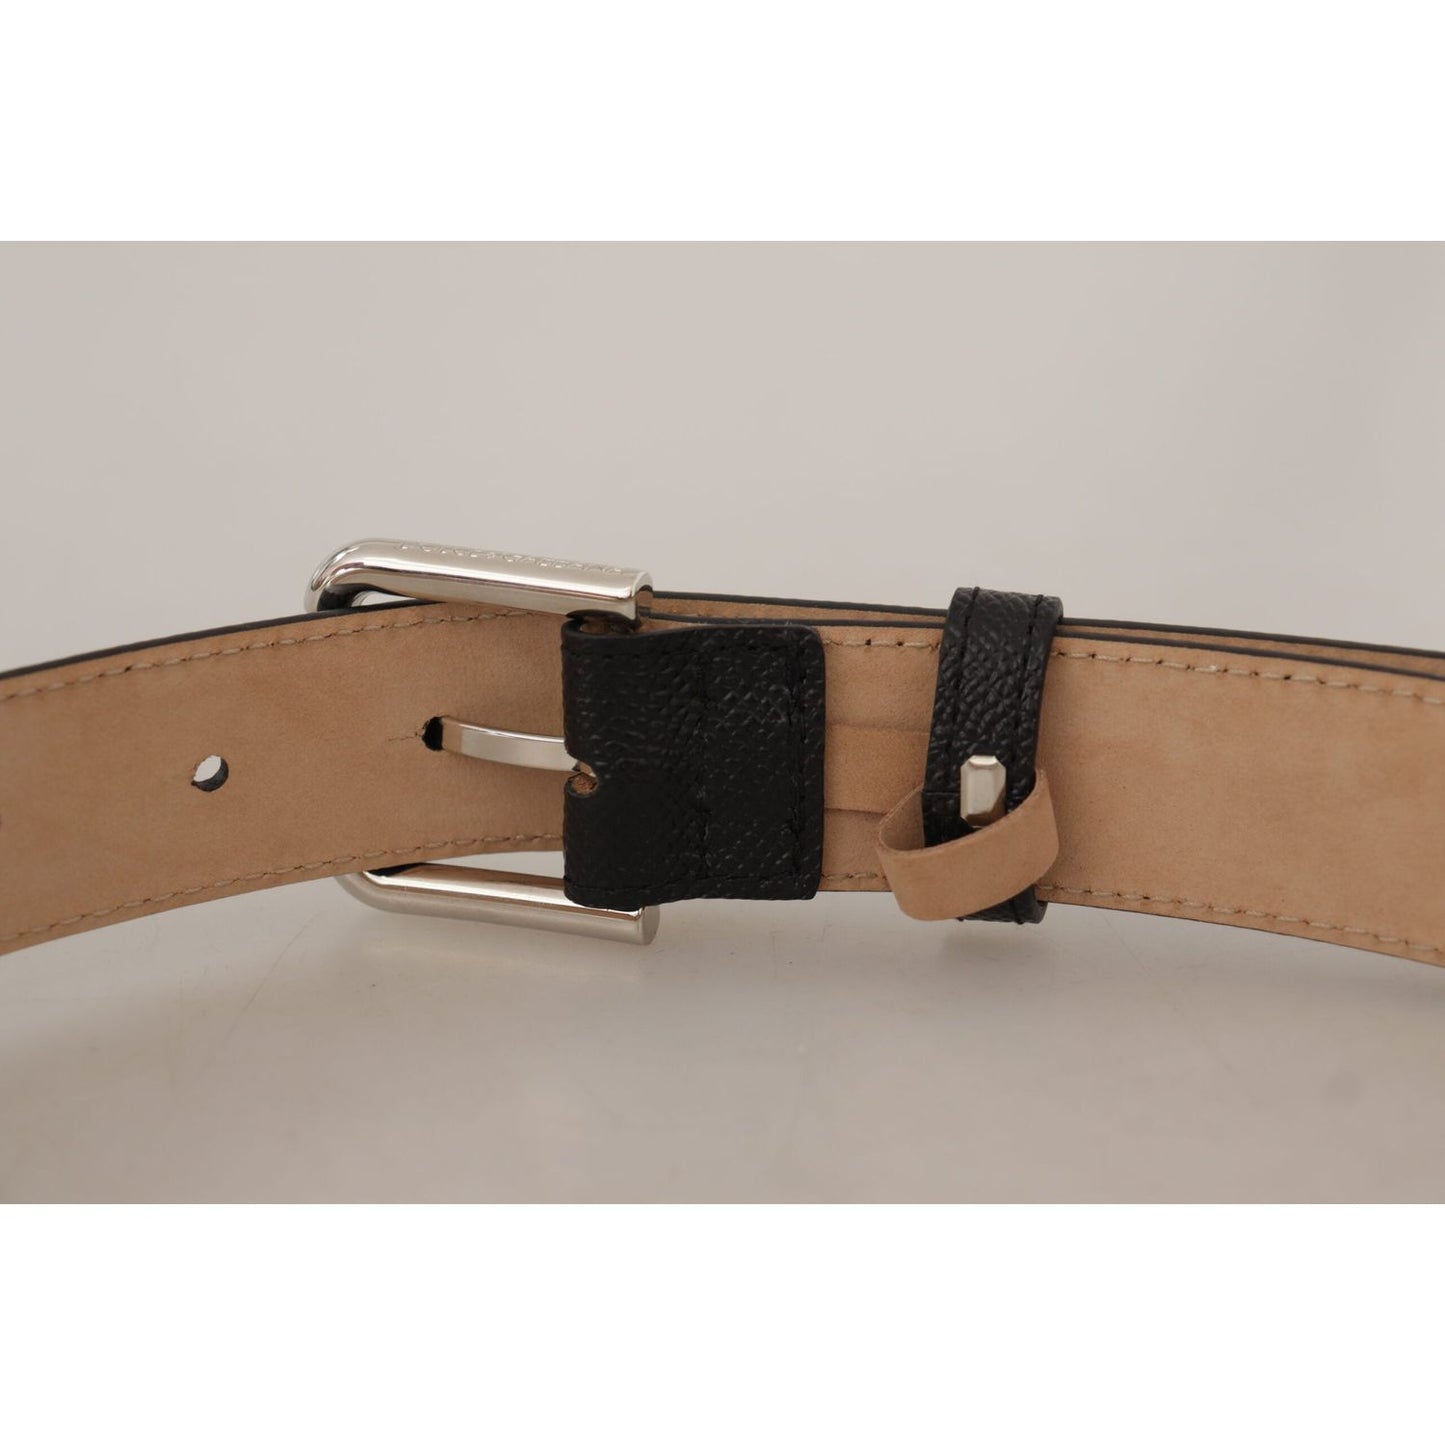 Sleek Black Authentic Leather Belt